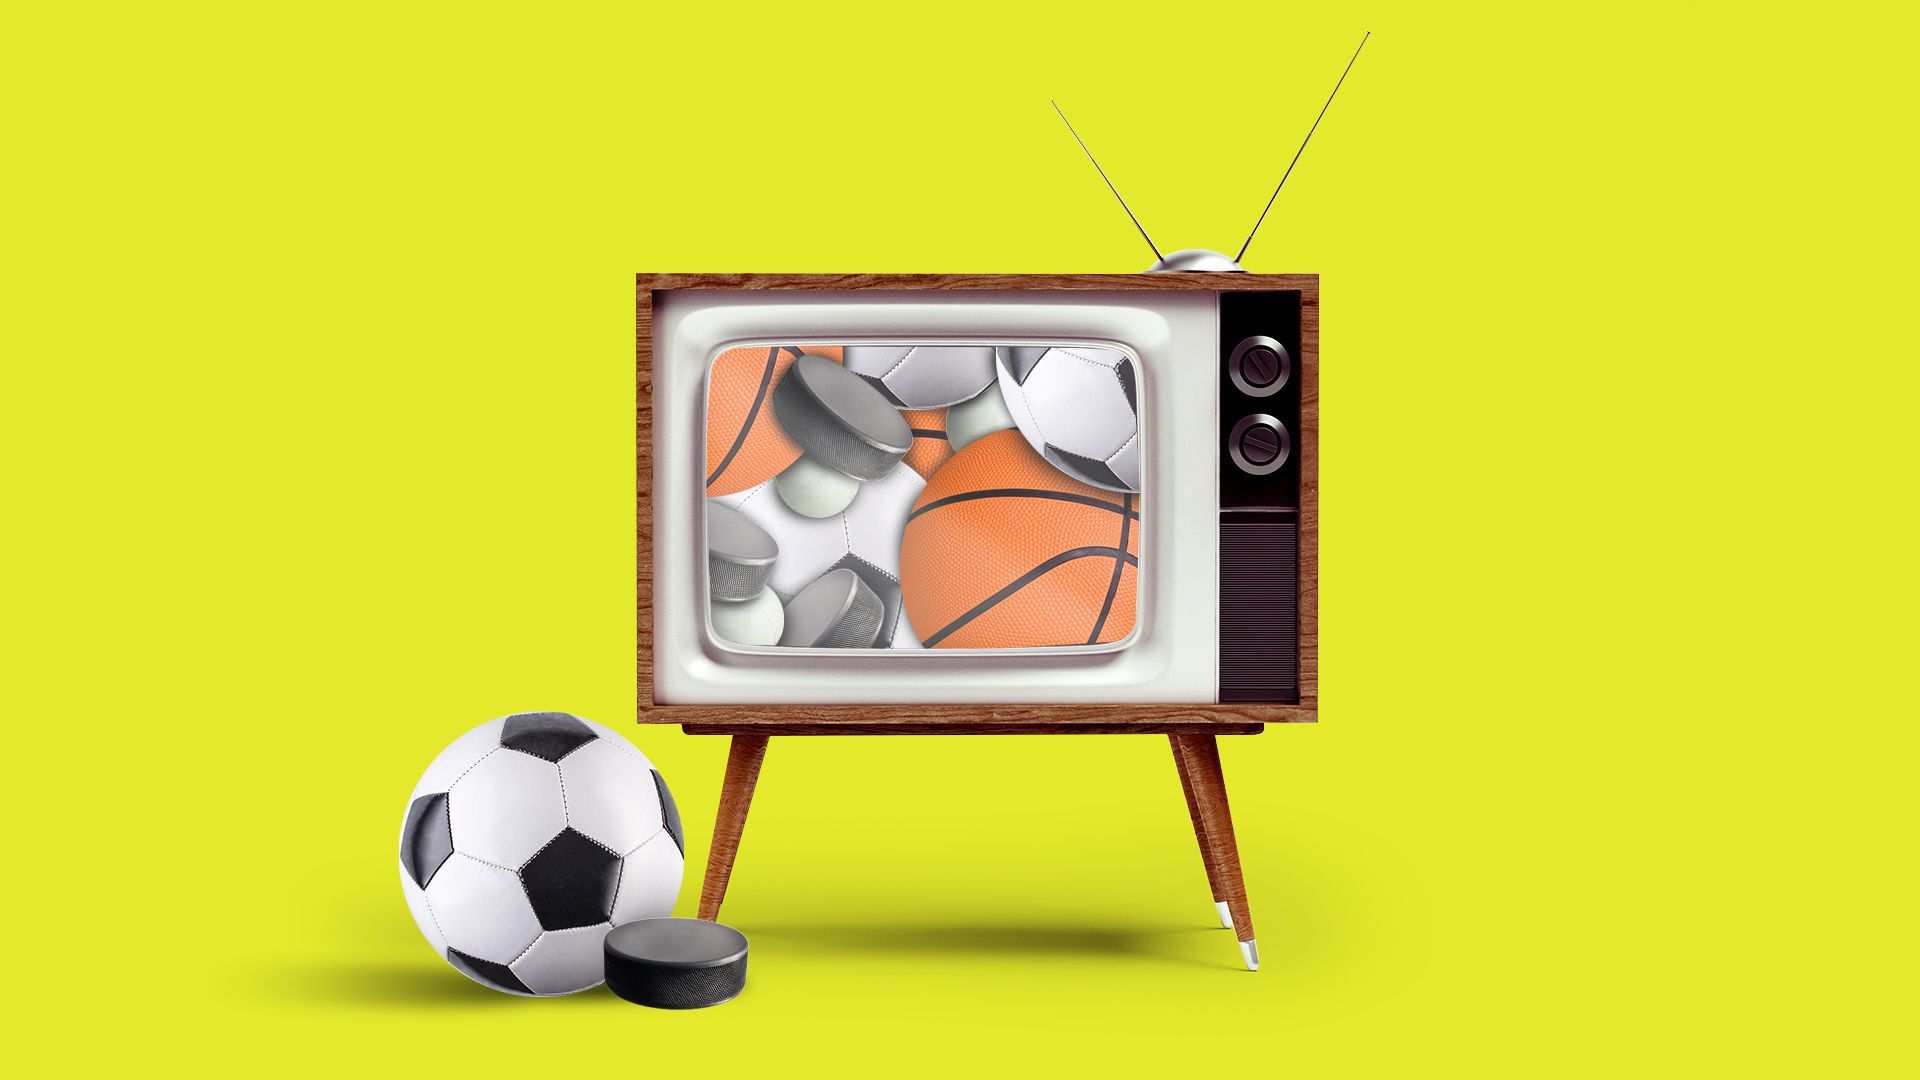 Illustration of sports equipment jammed inside of a TV